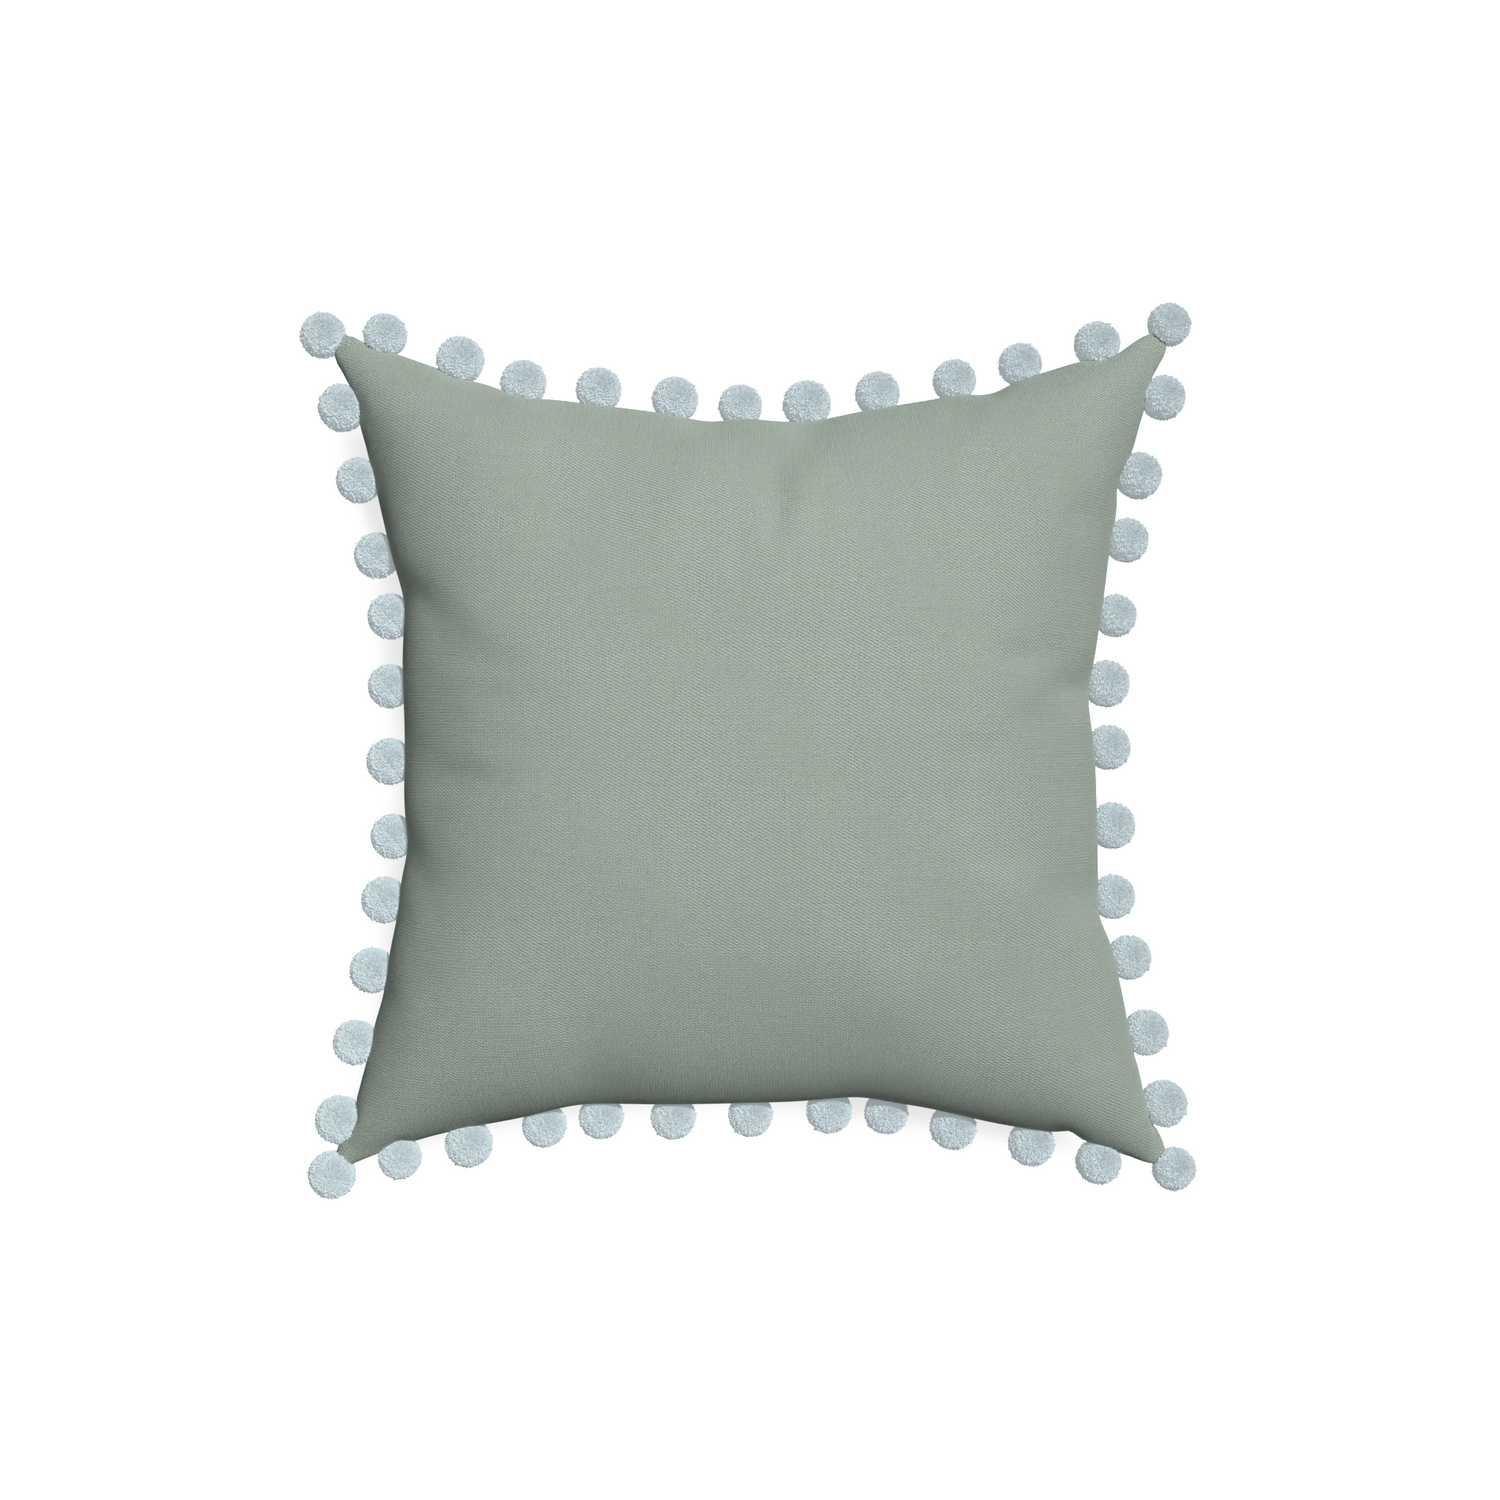 18-square sage custom pillow with powder pom pom on white background